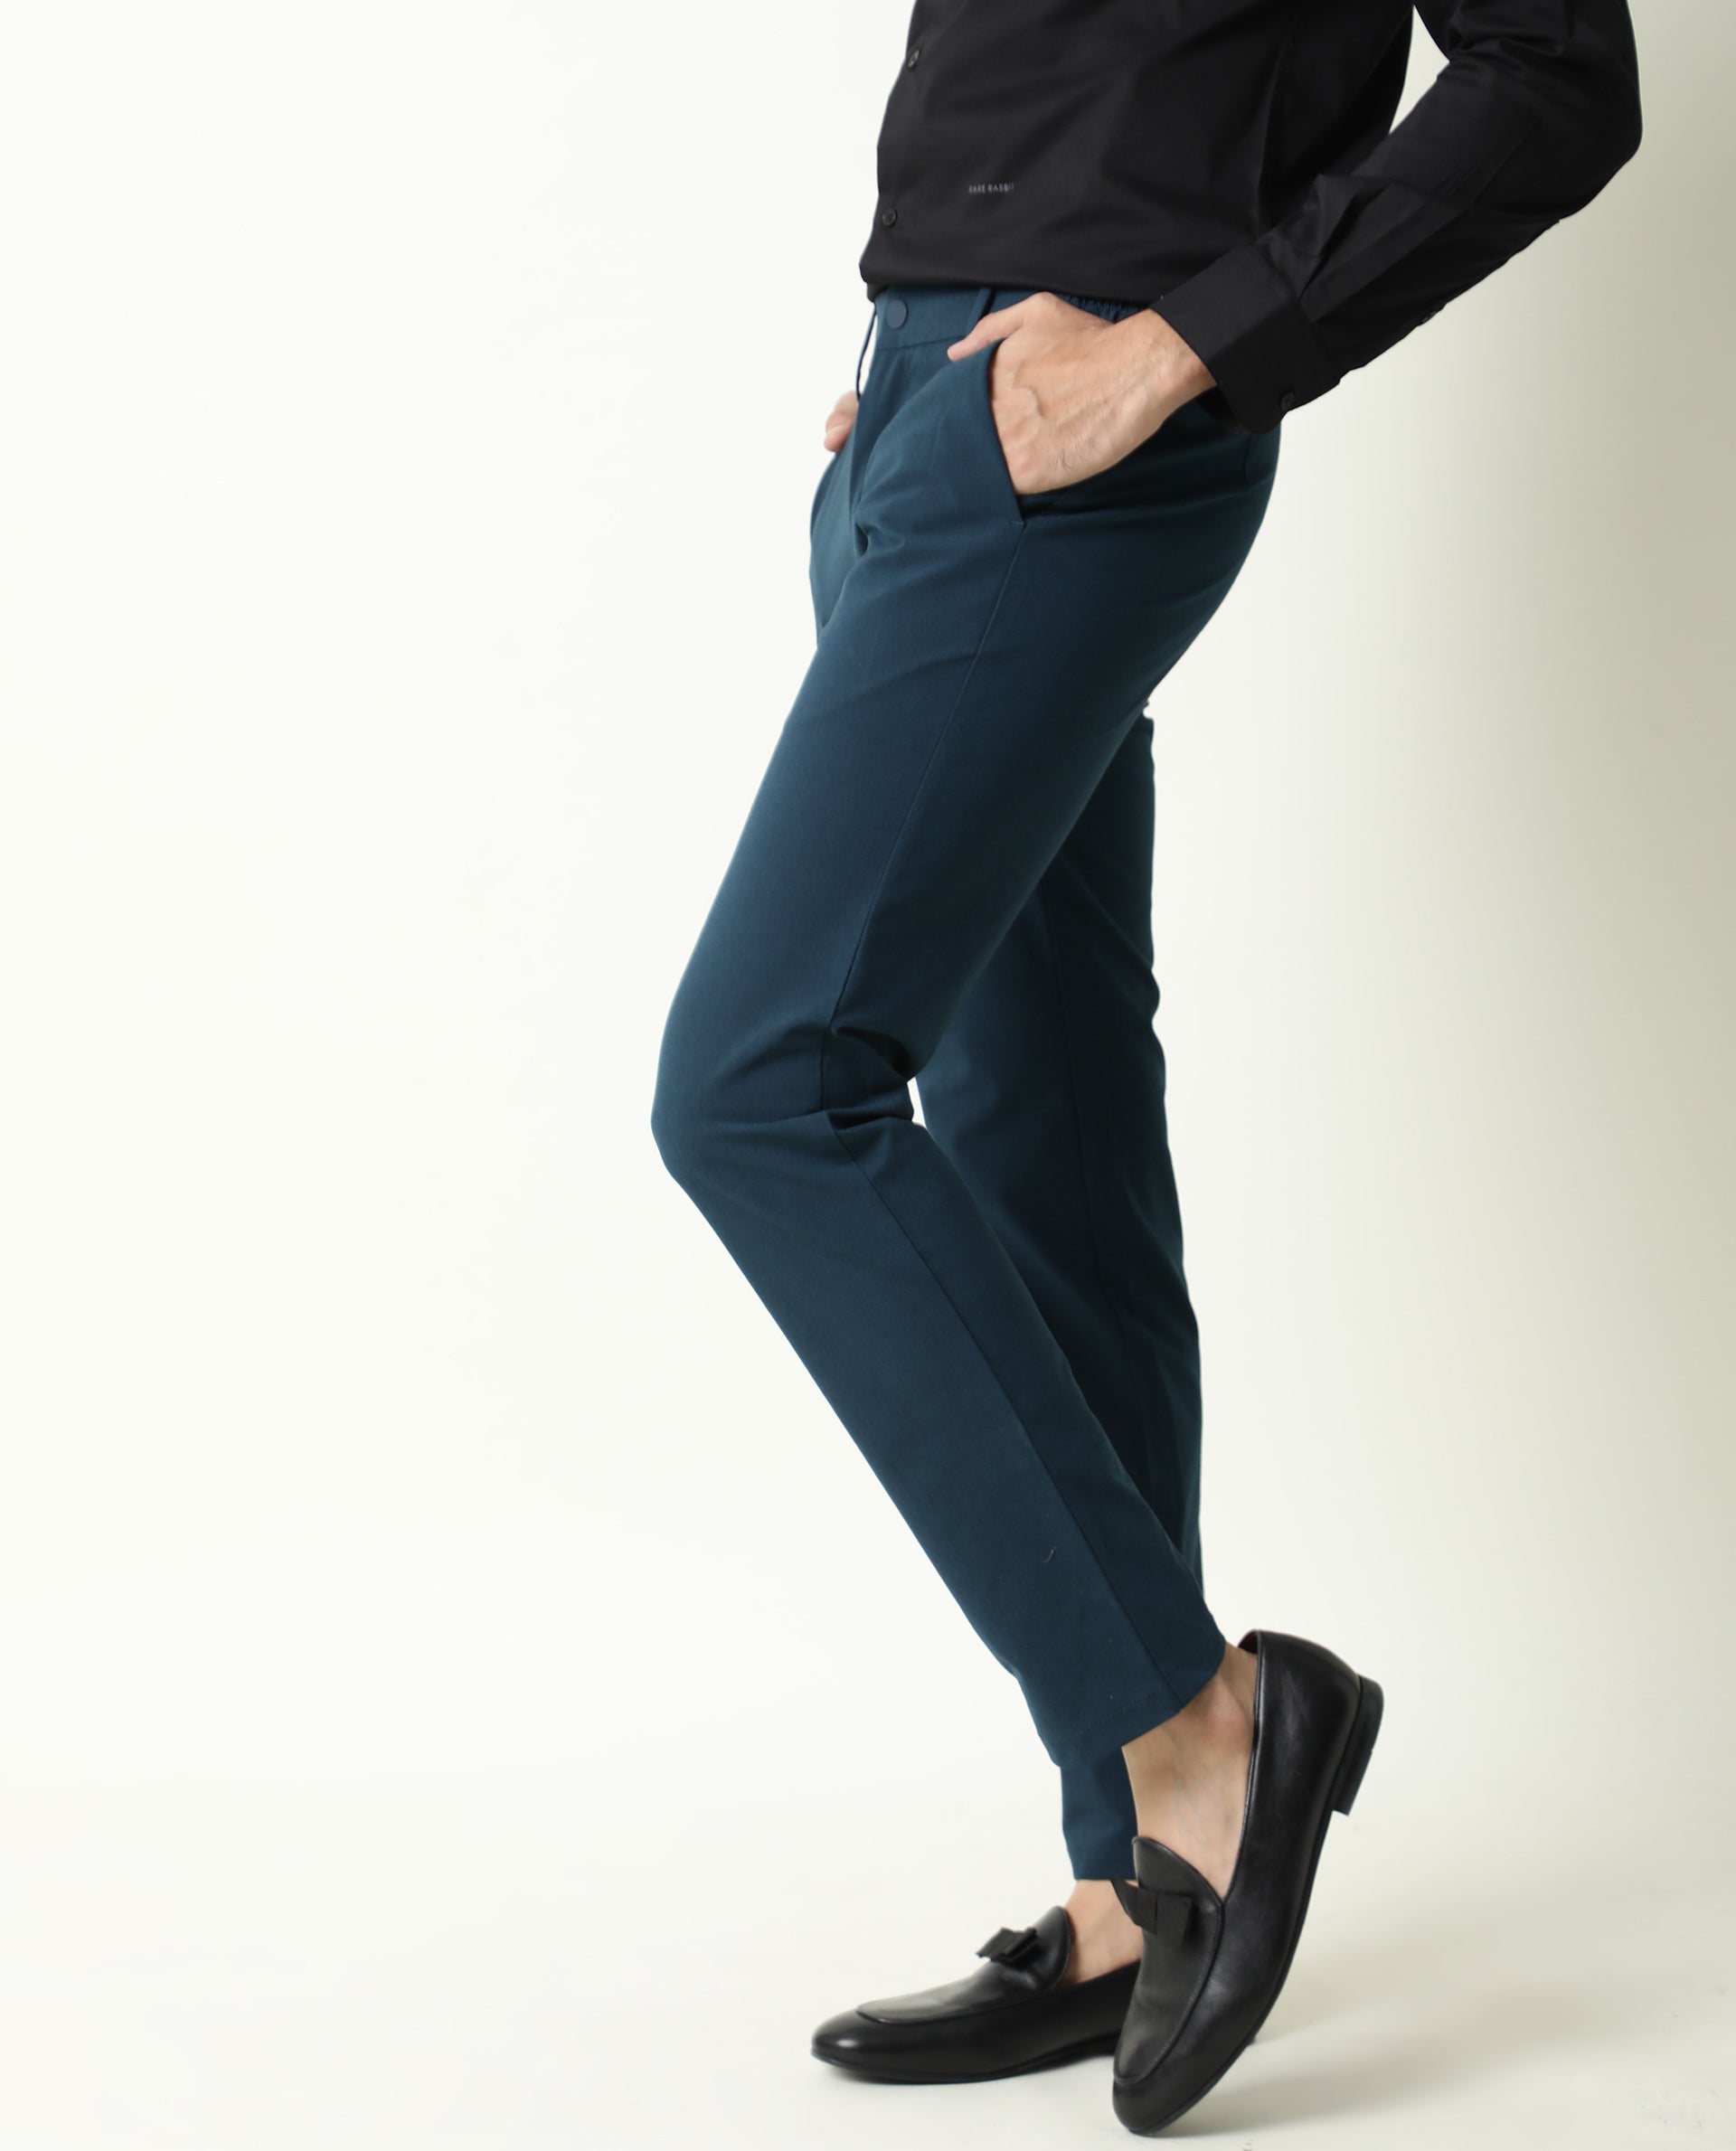 Lauren Ralph Lauren Mens Norton Classic Fit Formal Dress Pants Gray 33/32  at Amazon Men's Clothing store